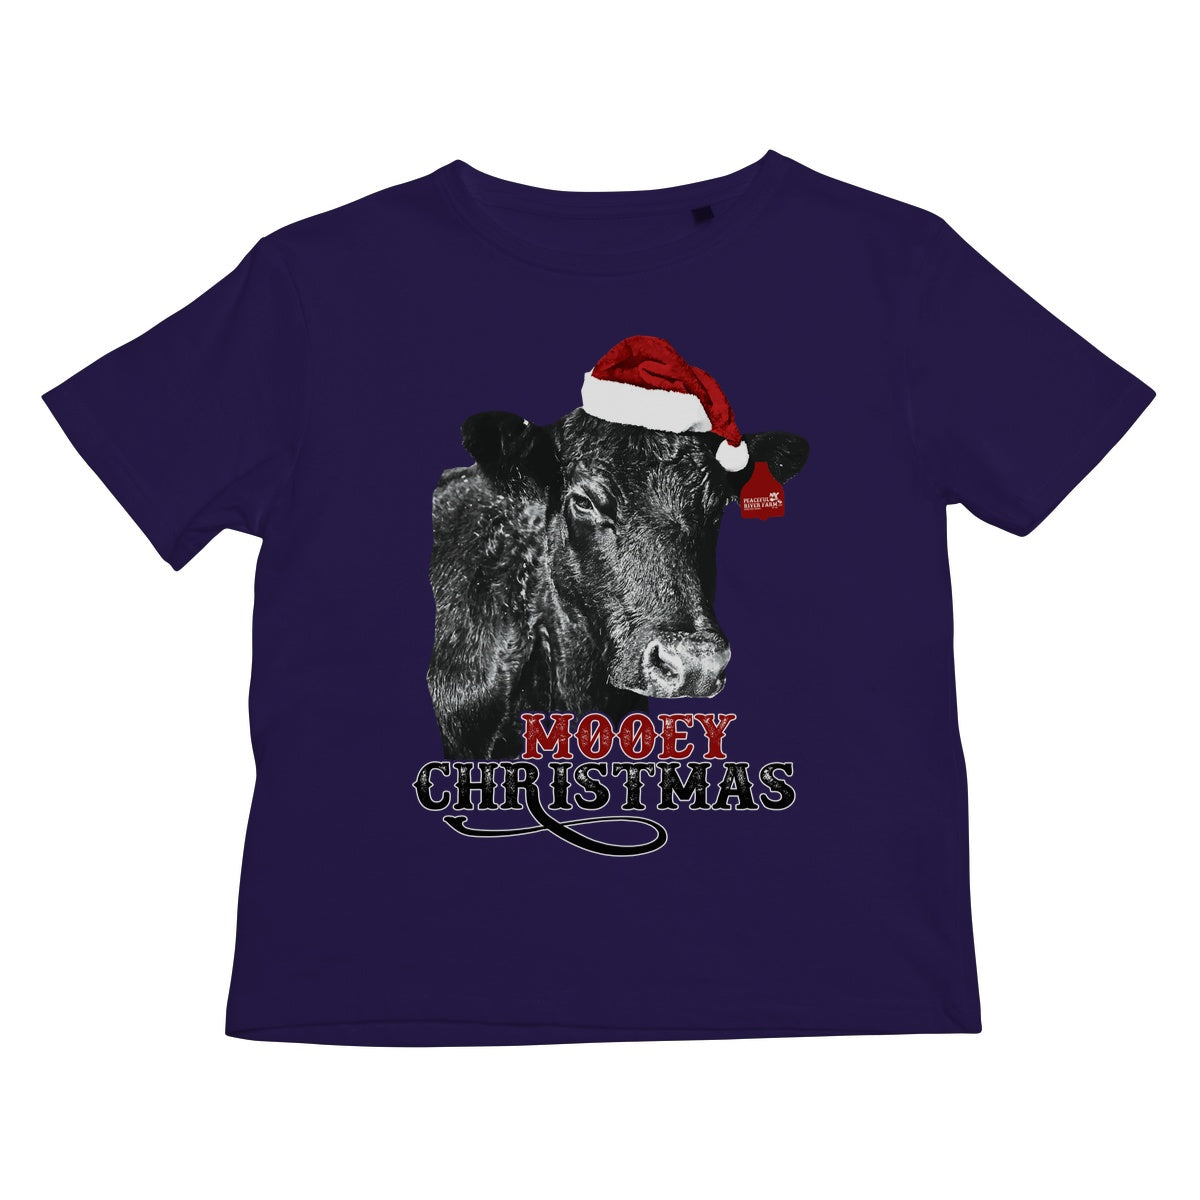 Mooey Christmas Kids T-Shirt